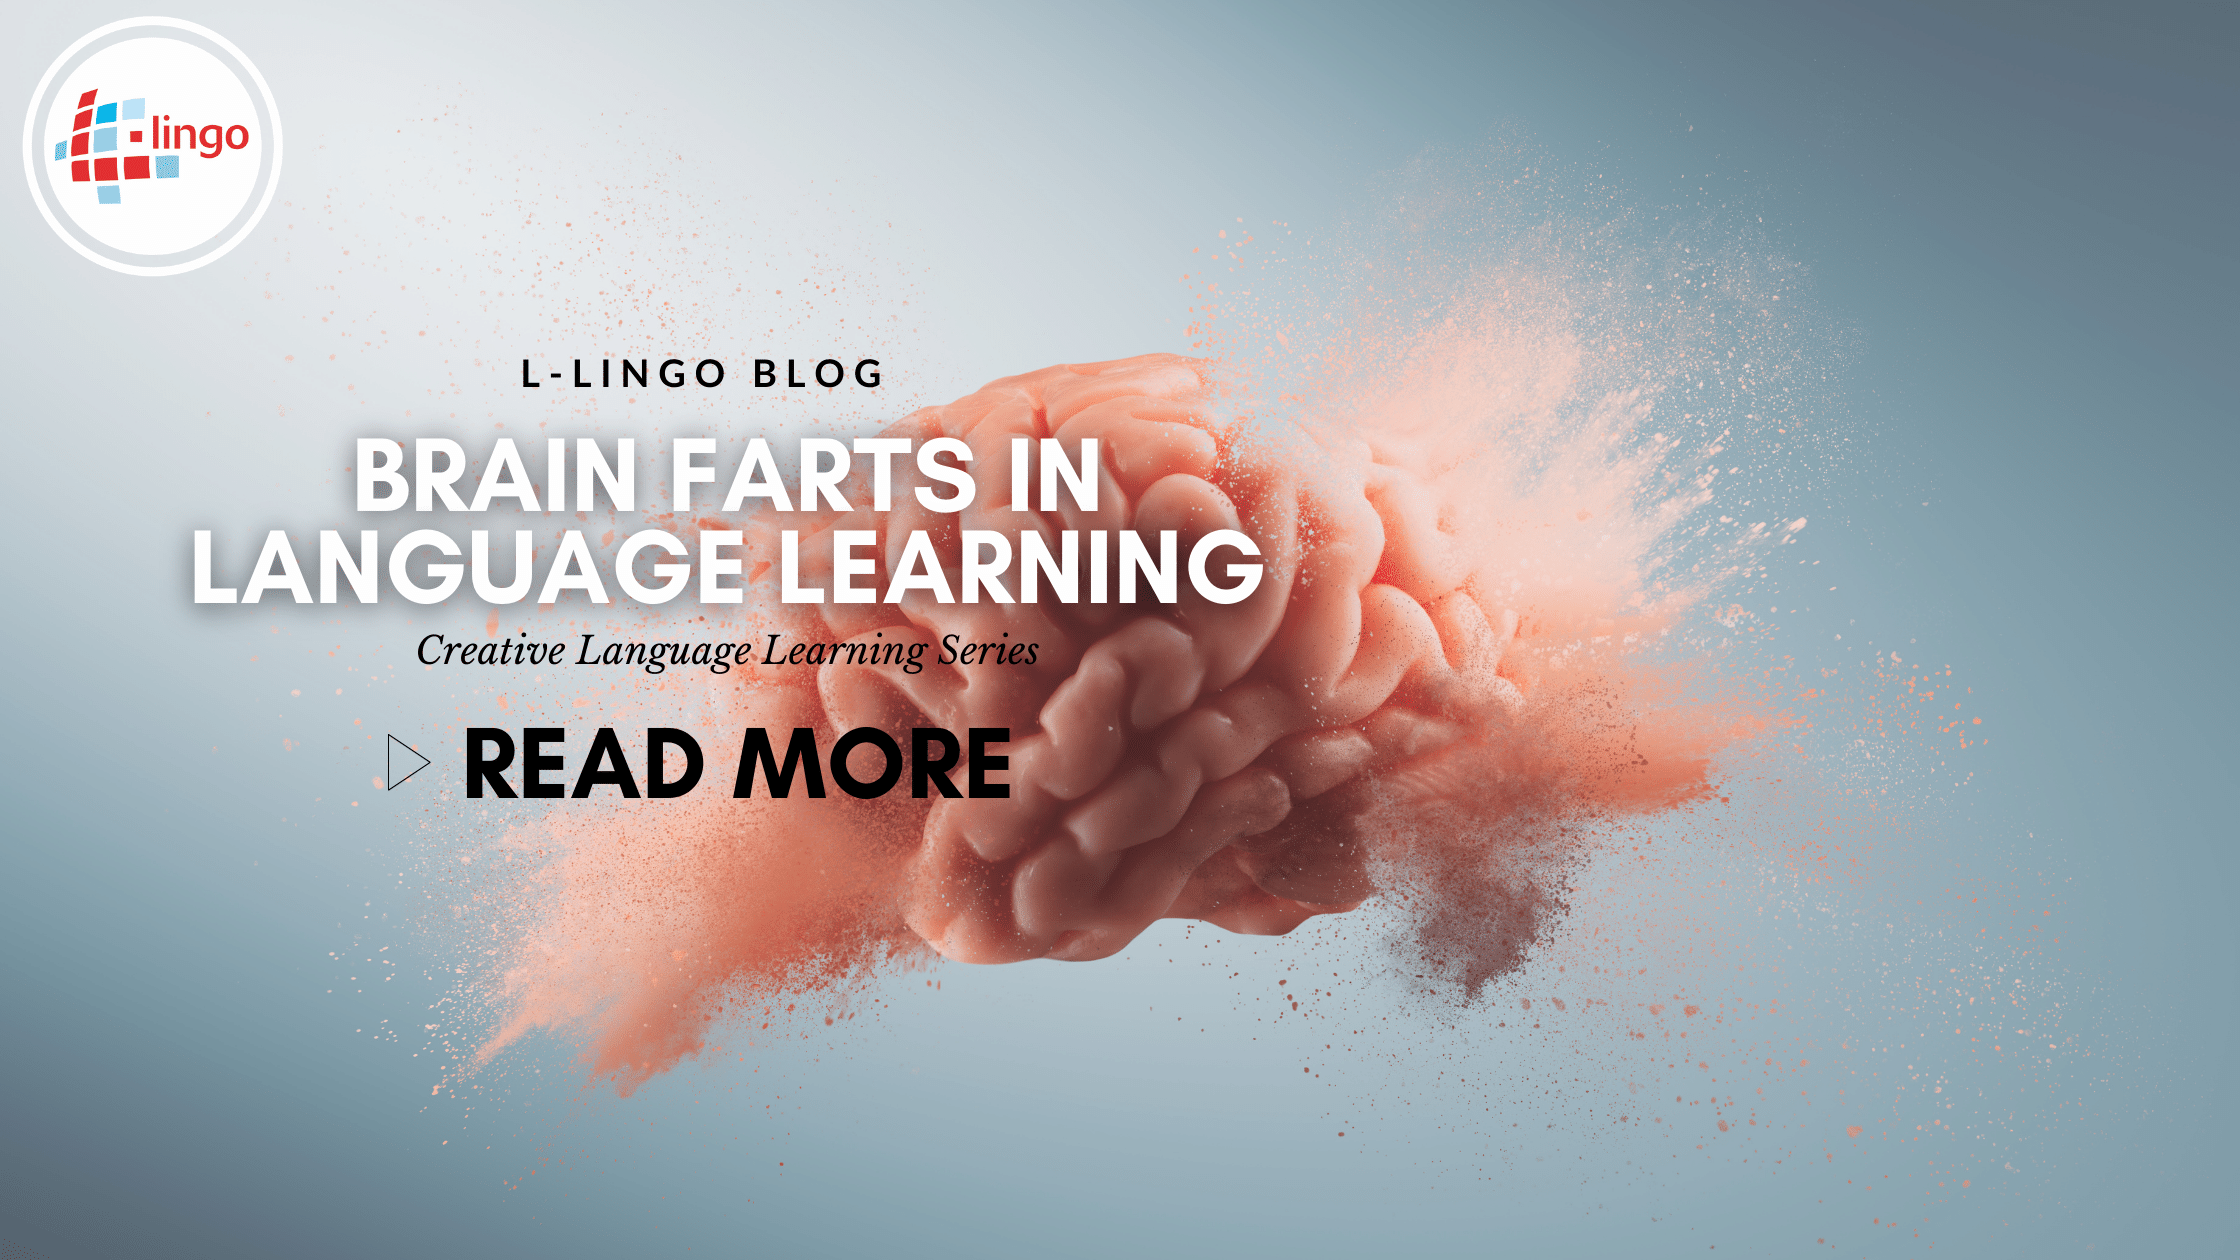 Brain farts in language learning l-lingo blog